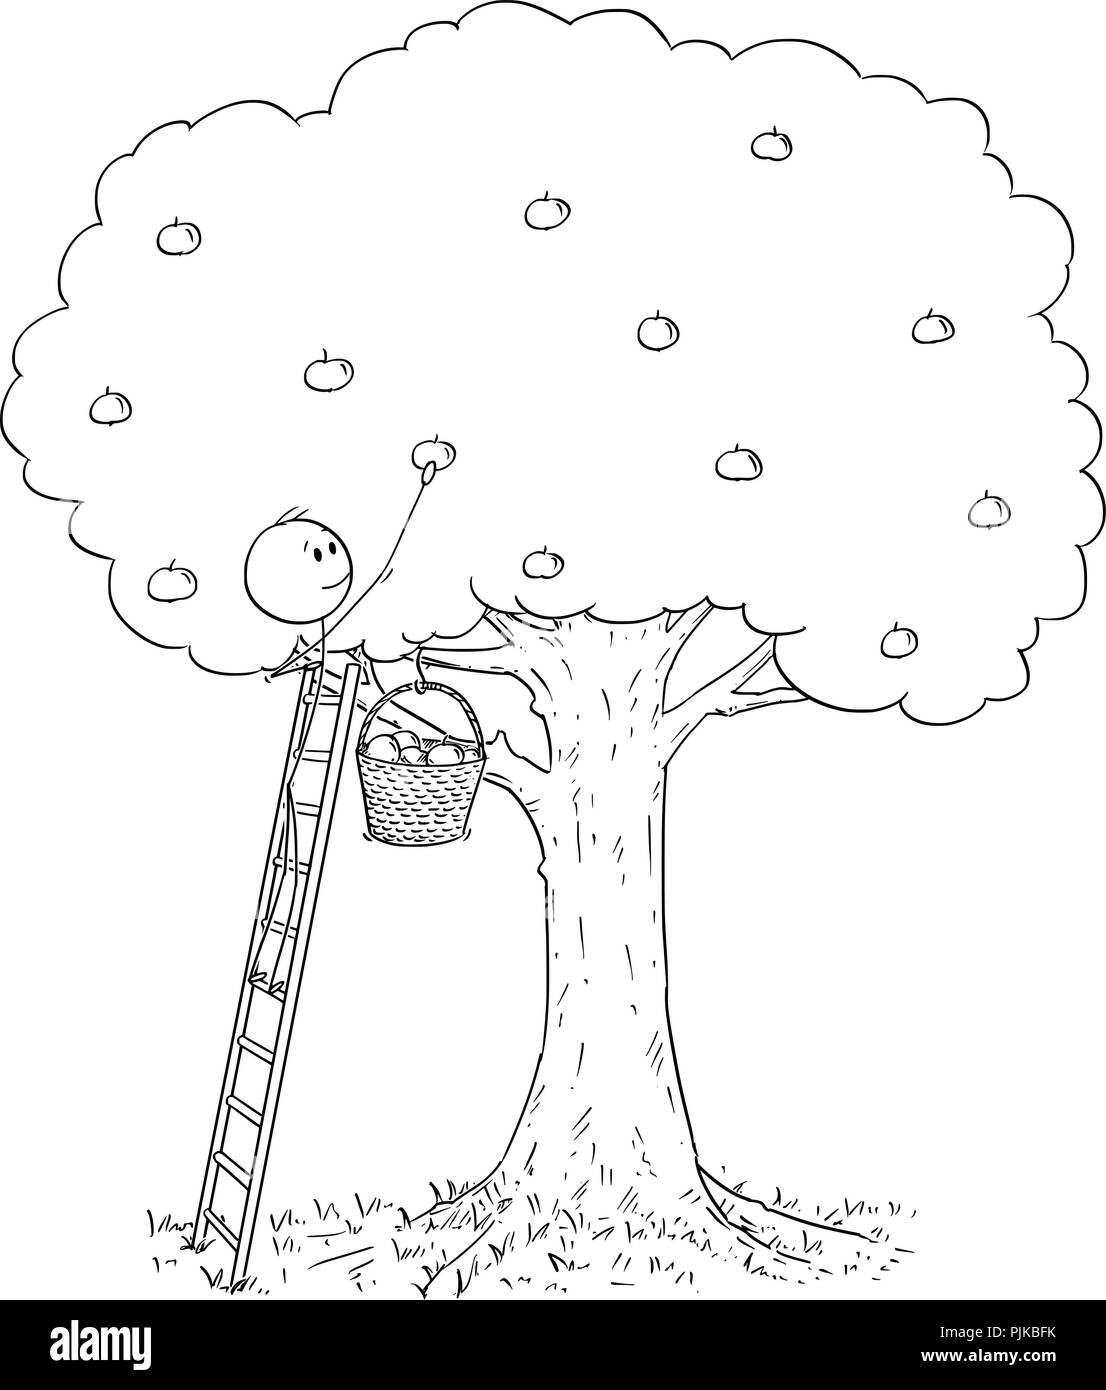 Cartoon of Man on Ladder Picking Fruit From Apple Tree Stock Vector